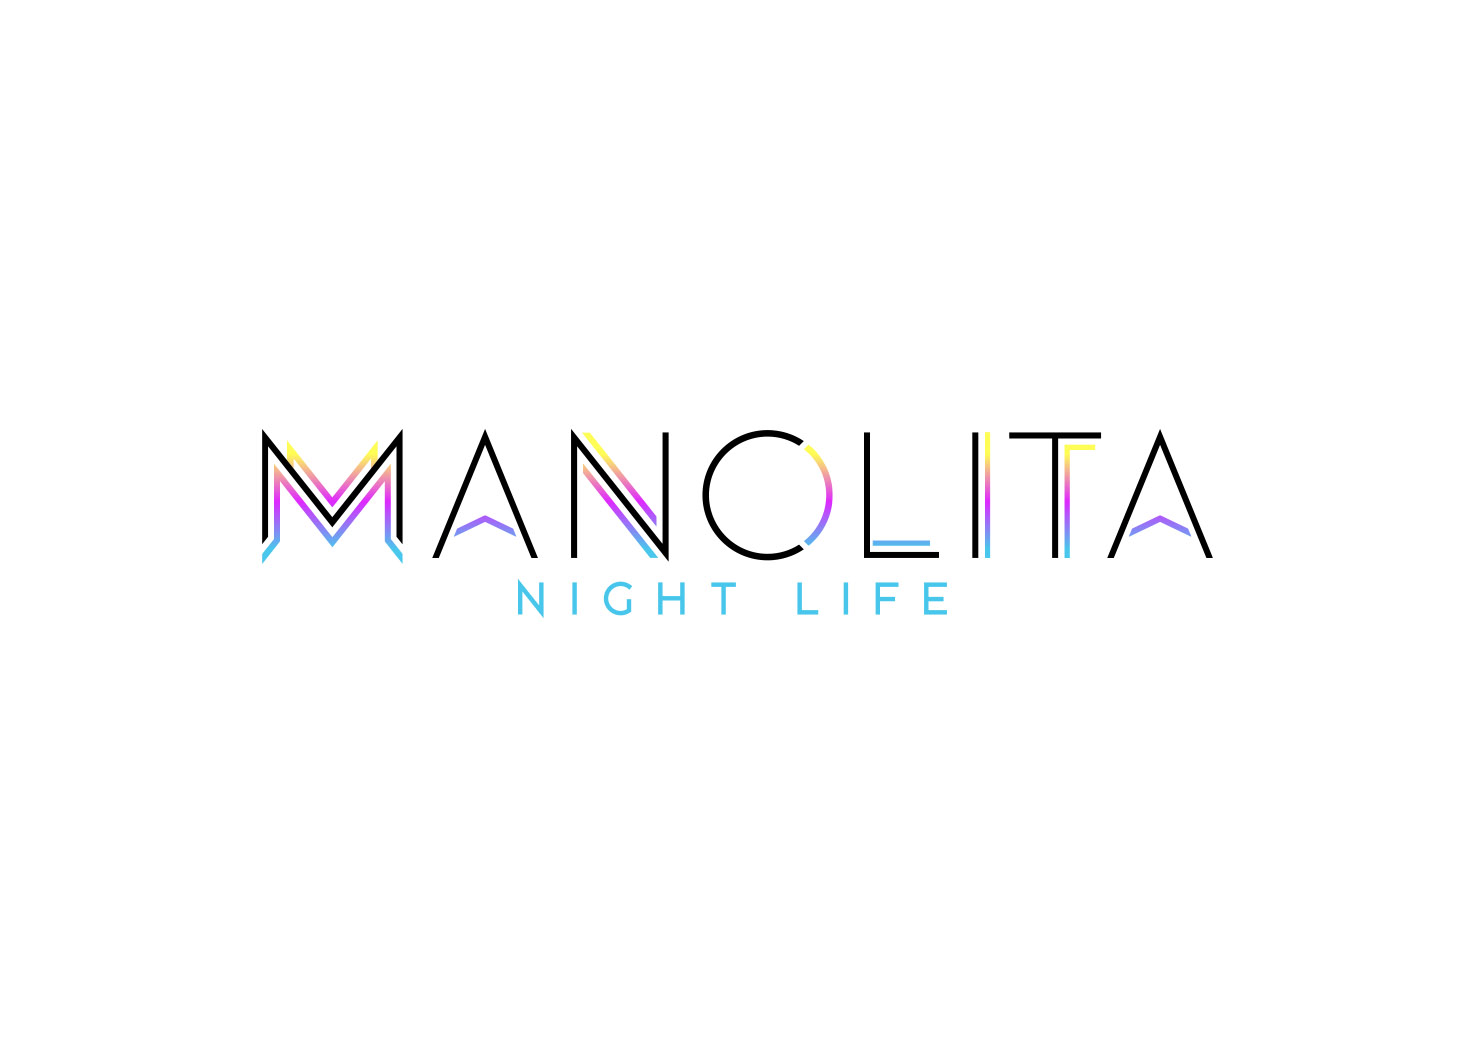 MANOLITA NIGHT LIFE